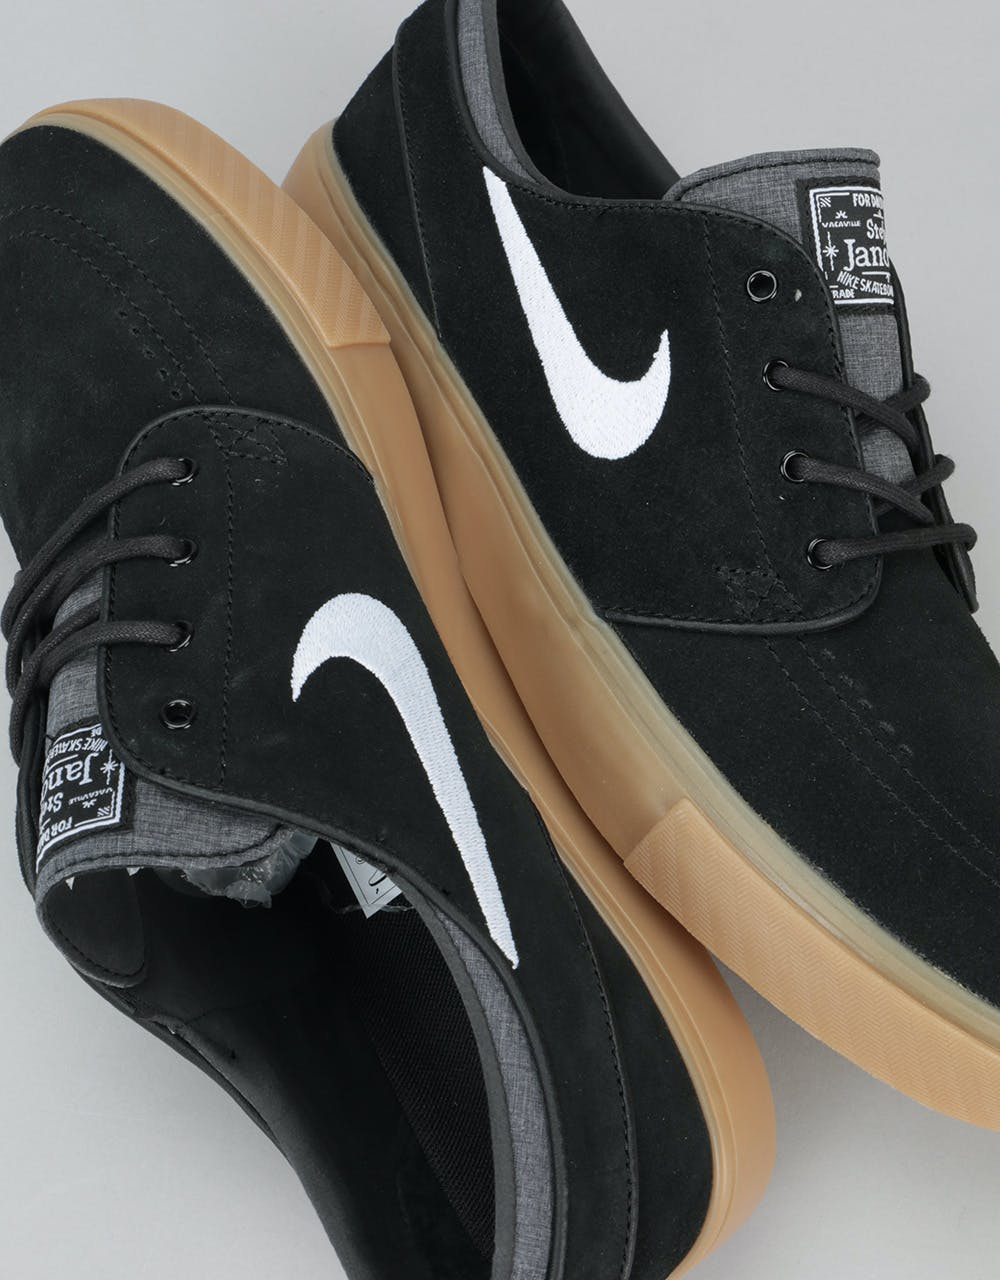 Nike SB Zoom Stefan Janoski Skate Shoes - Black/White-Gum Light Brown